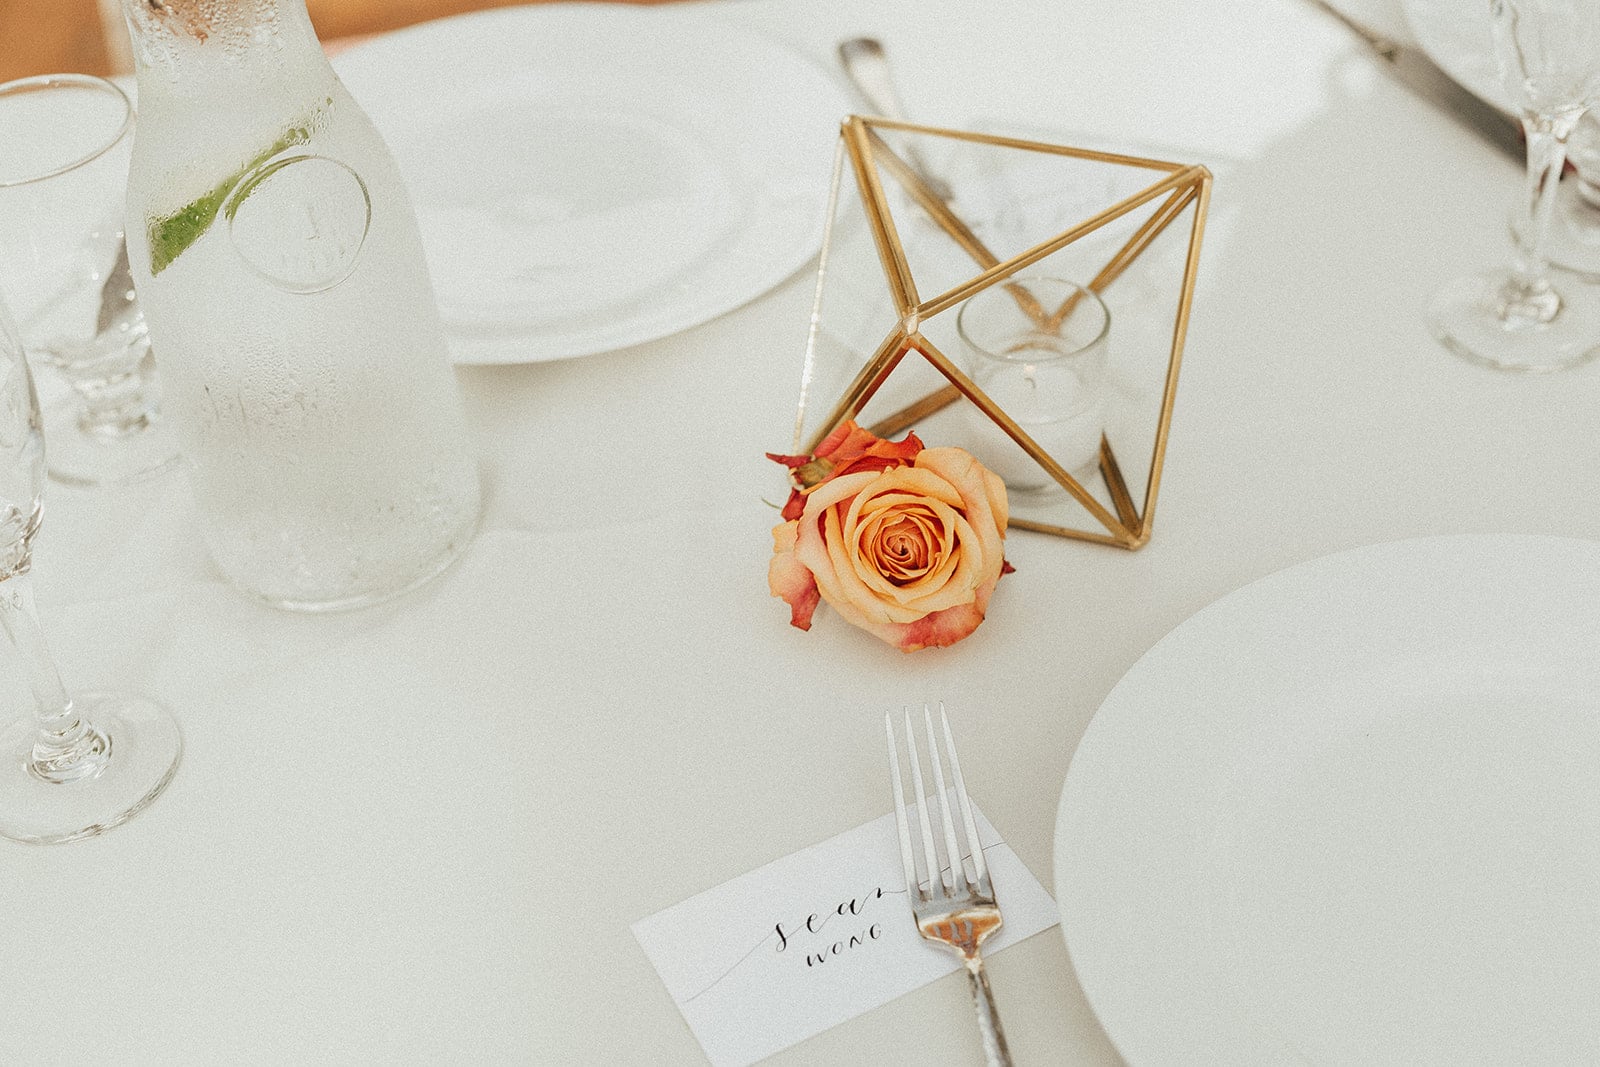 Wedding Event Table Centerpiece Ideas